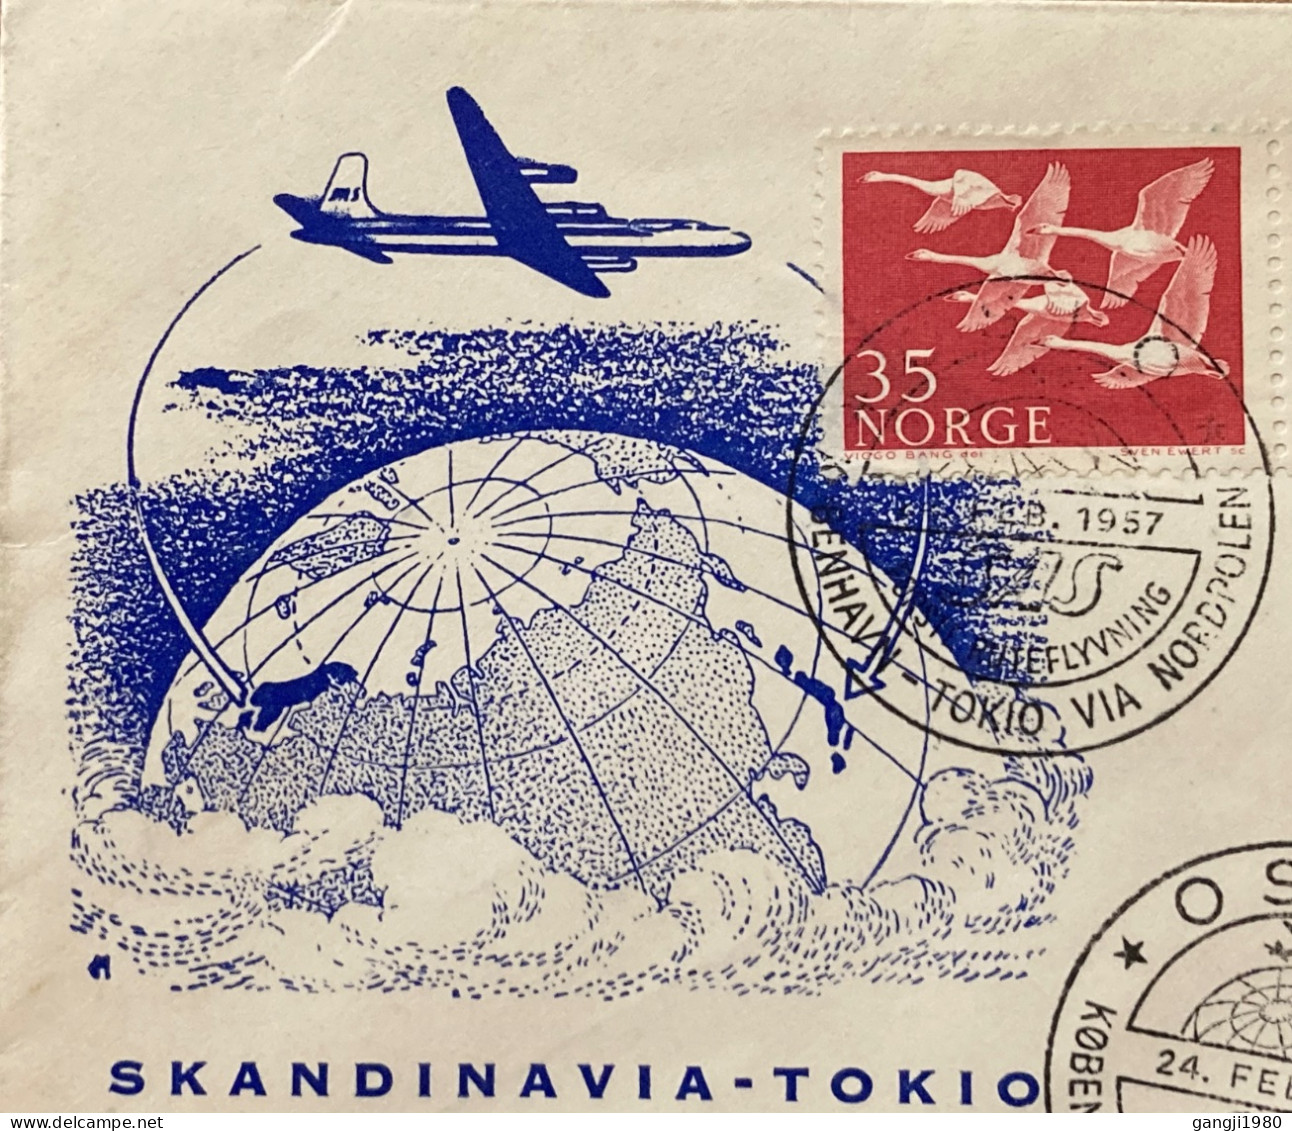 NORWAY 1957, FIRST FLIGHT COVER TO JAPAN, KOPEHAVEN -TO KYO VIA NORDPOLEN OSLO, TOKYO CITY CANCEL, ILLUSTRATE PLANE ON G - Storia Postale